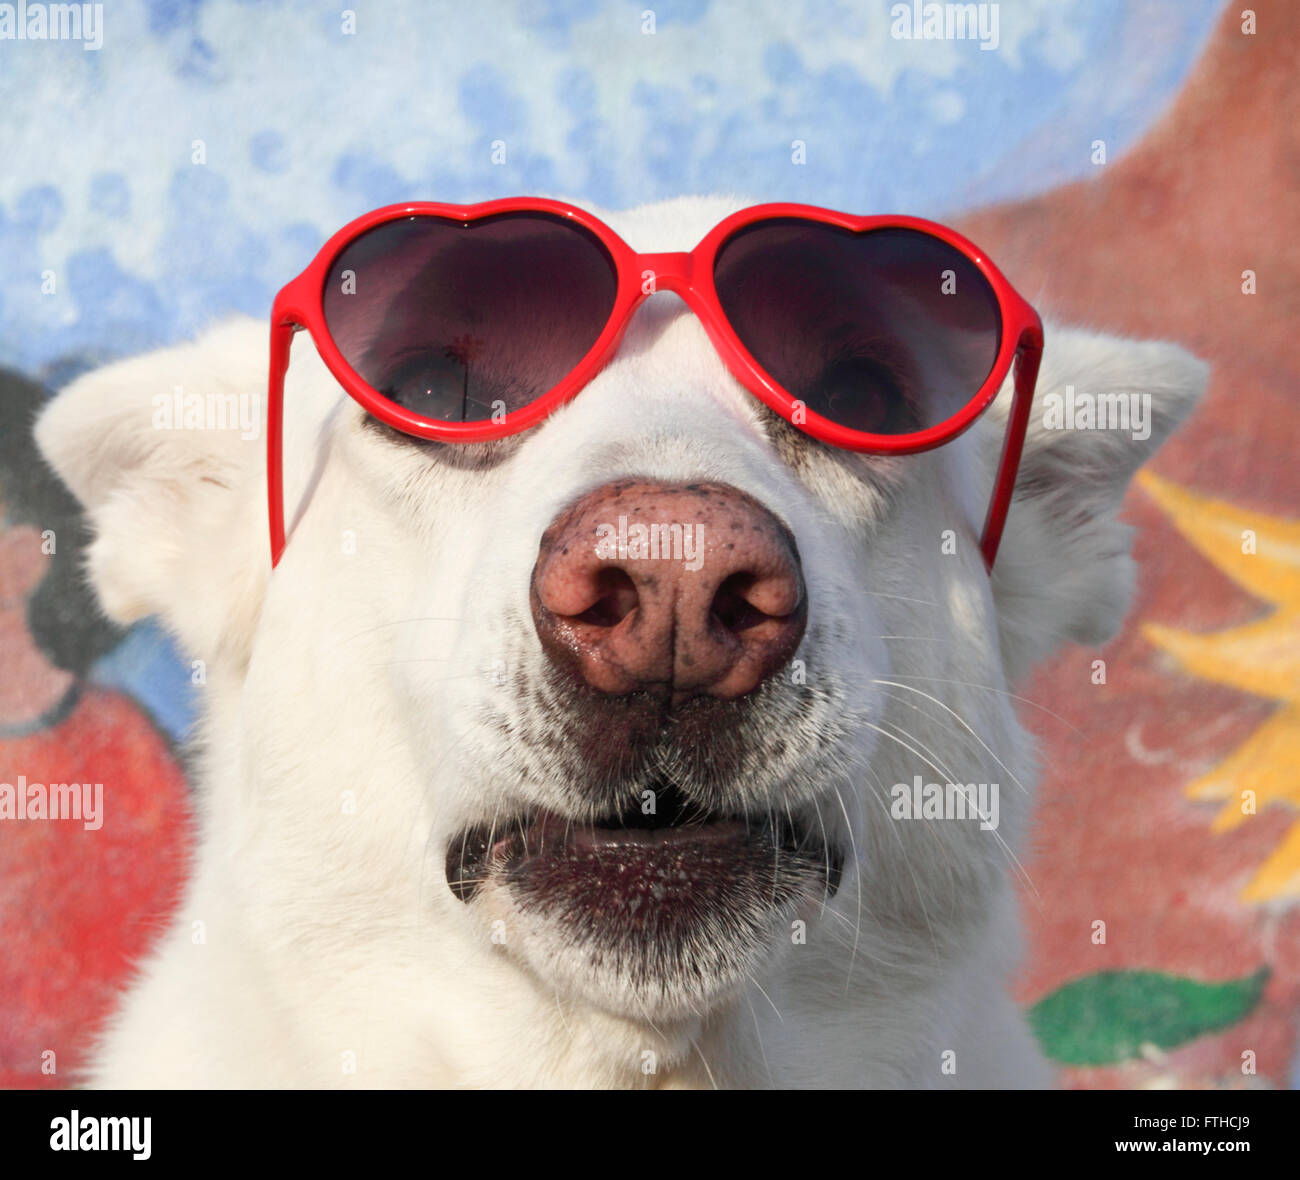 Dog wearing heart-shaped sunglasses on the Venice boardwalk Stock Photo